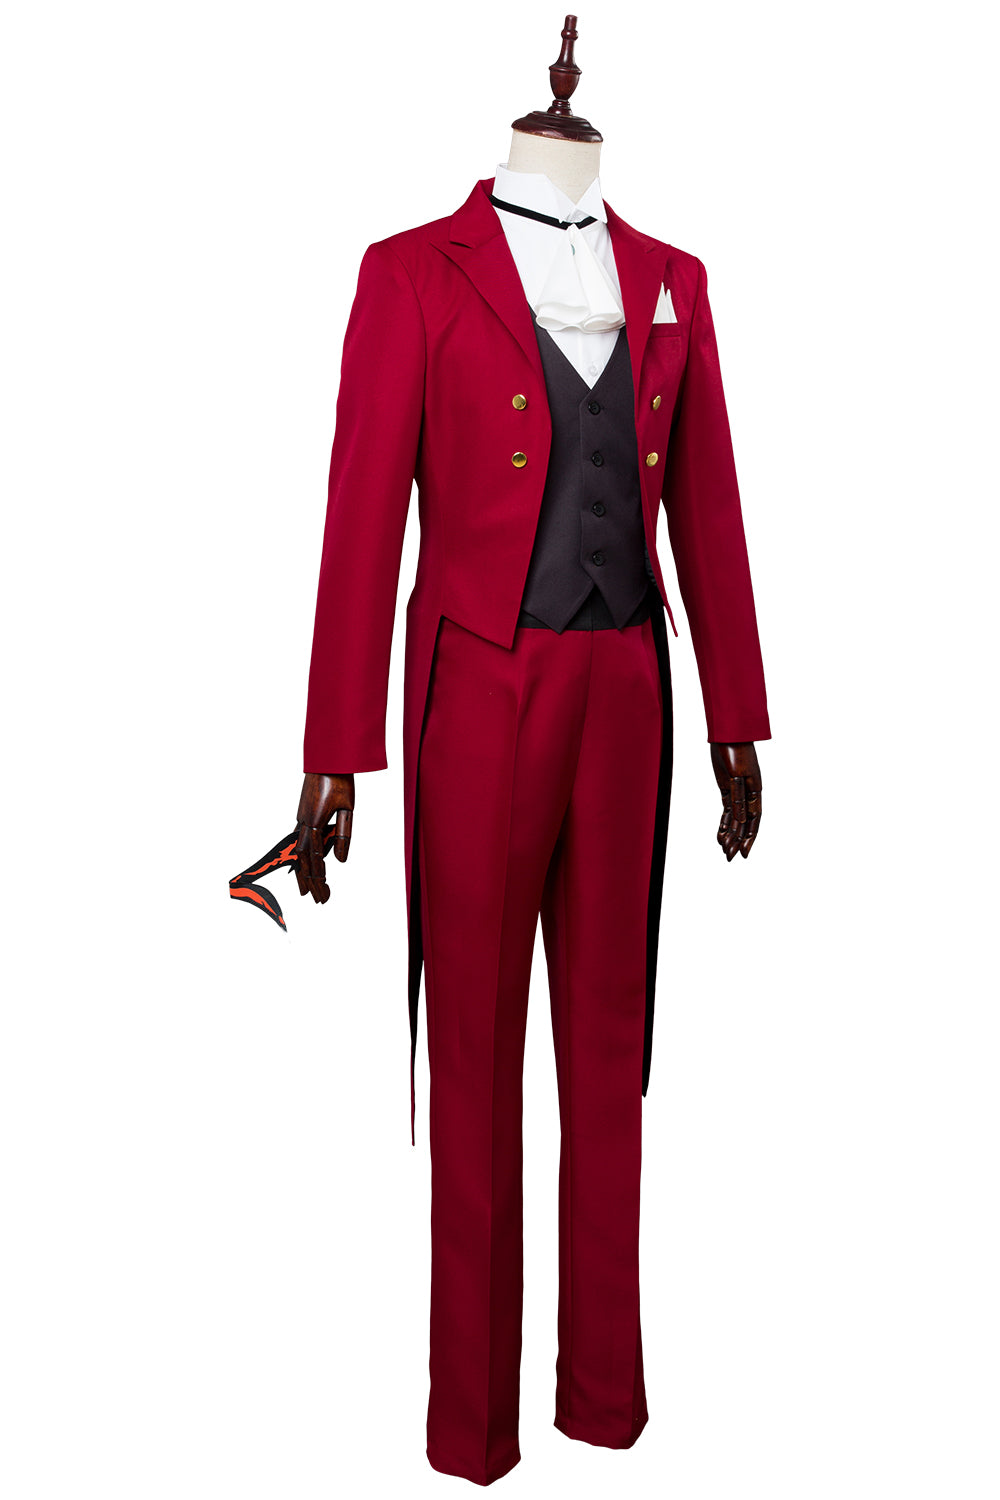 Persona 5 Protagonist Joker Bal Masque Cosplay Costume